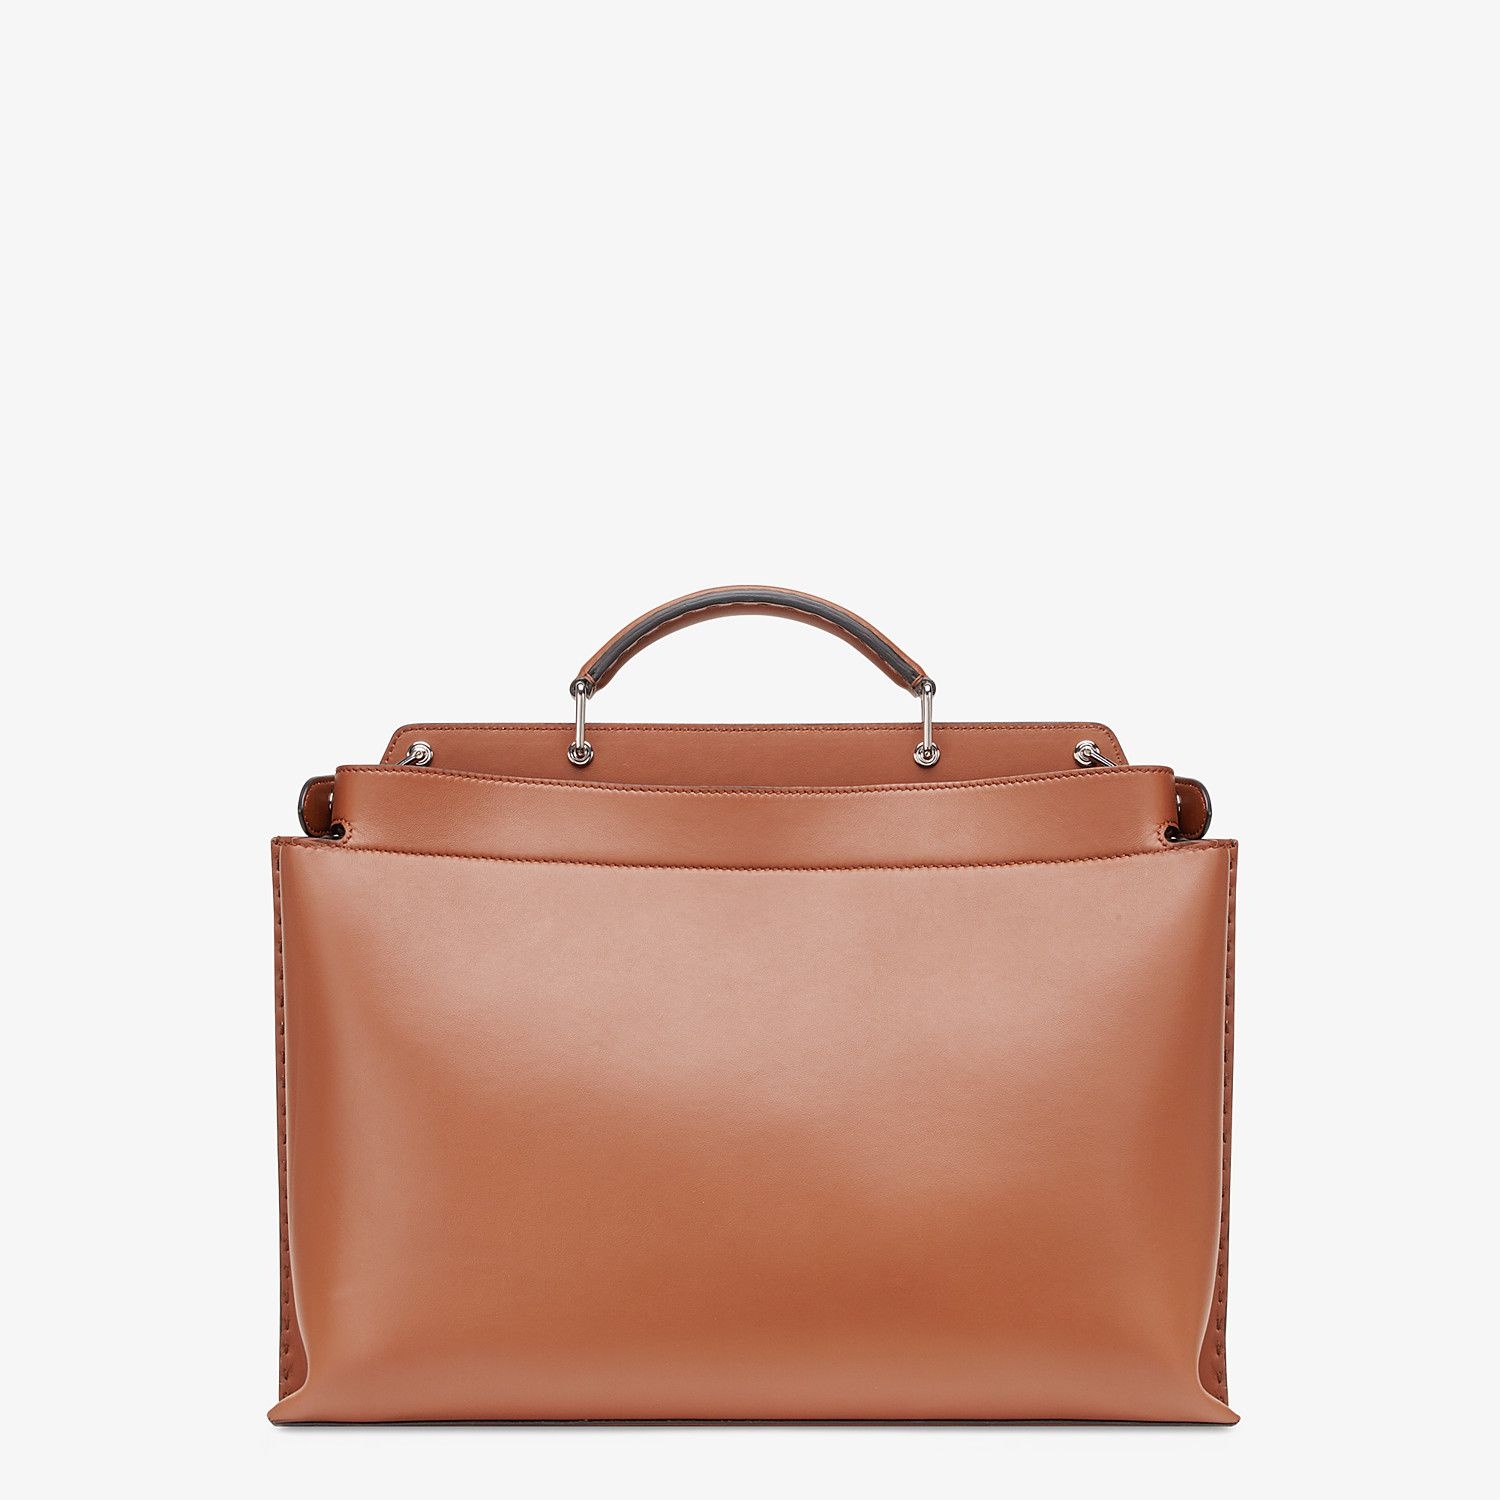 Brown leather bag - 3